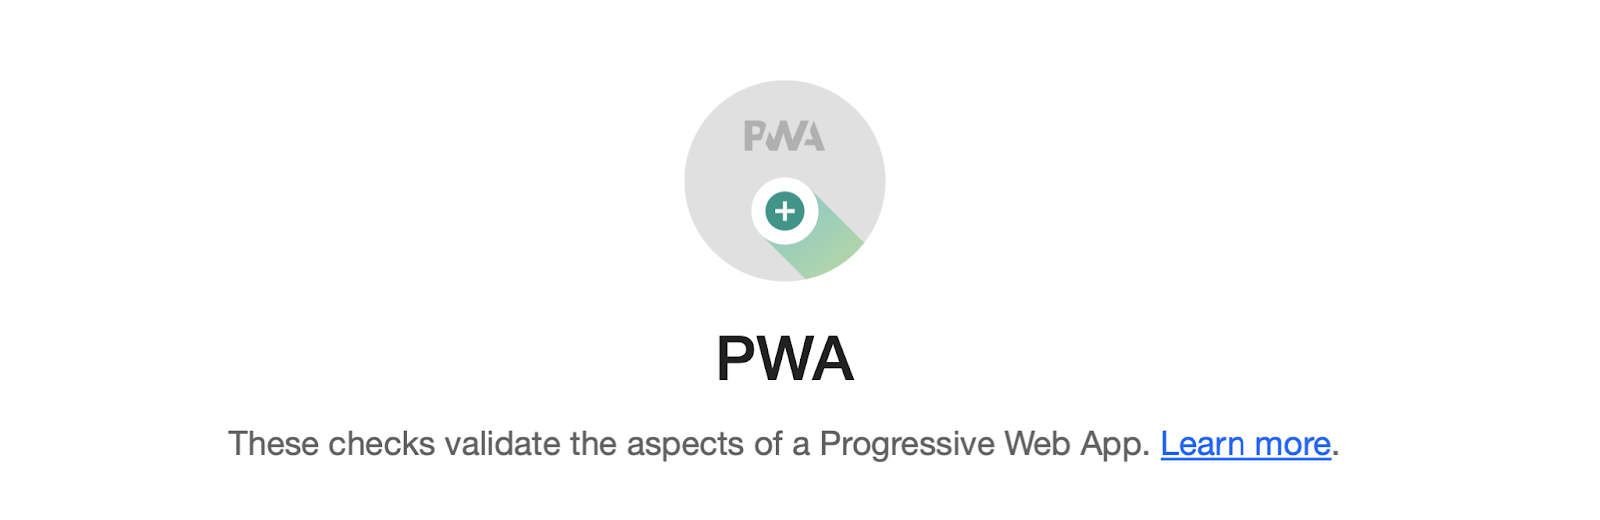 PWA audit in Lighthouse